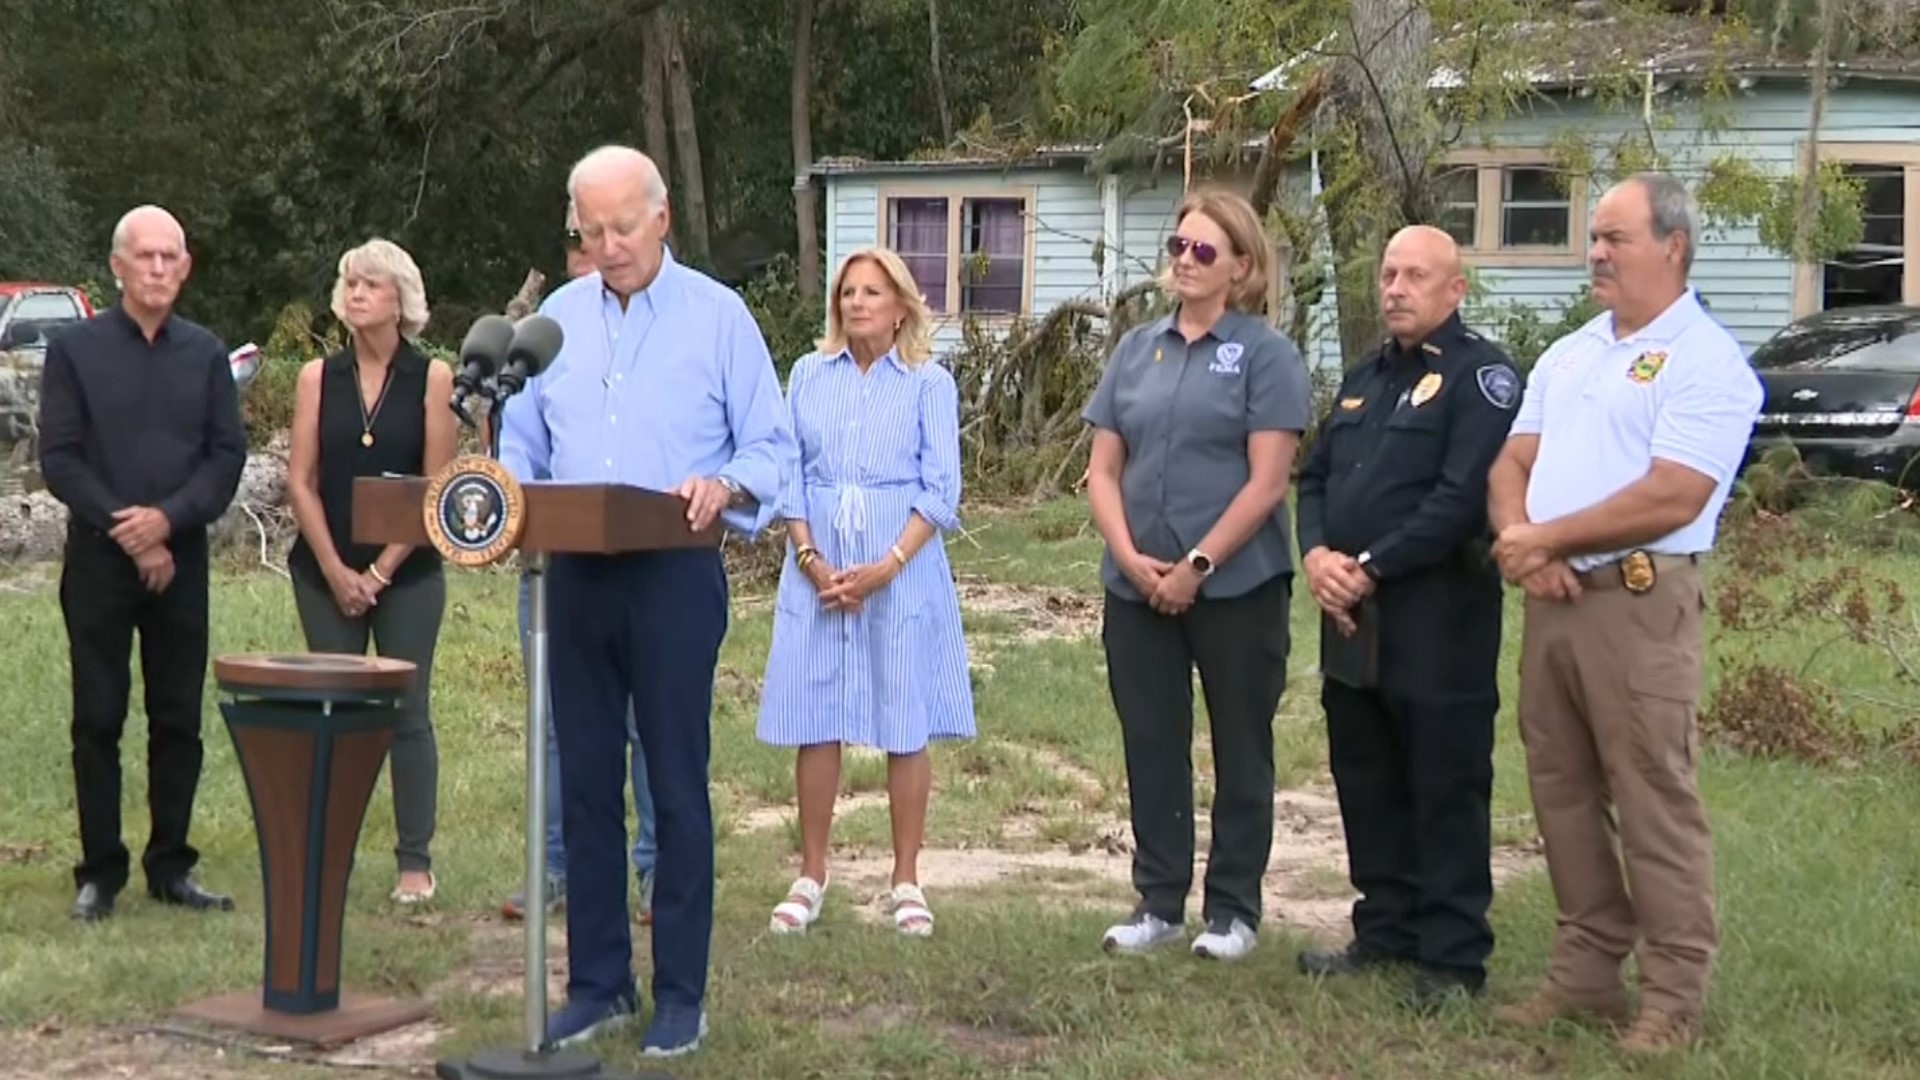 President Joe Biden and First Lady Jill Biden visited North Florida Saturday to survey damage brought by Hurricane Idalia.